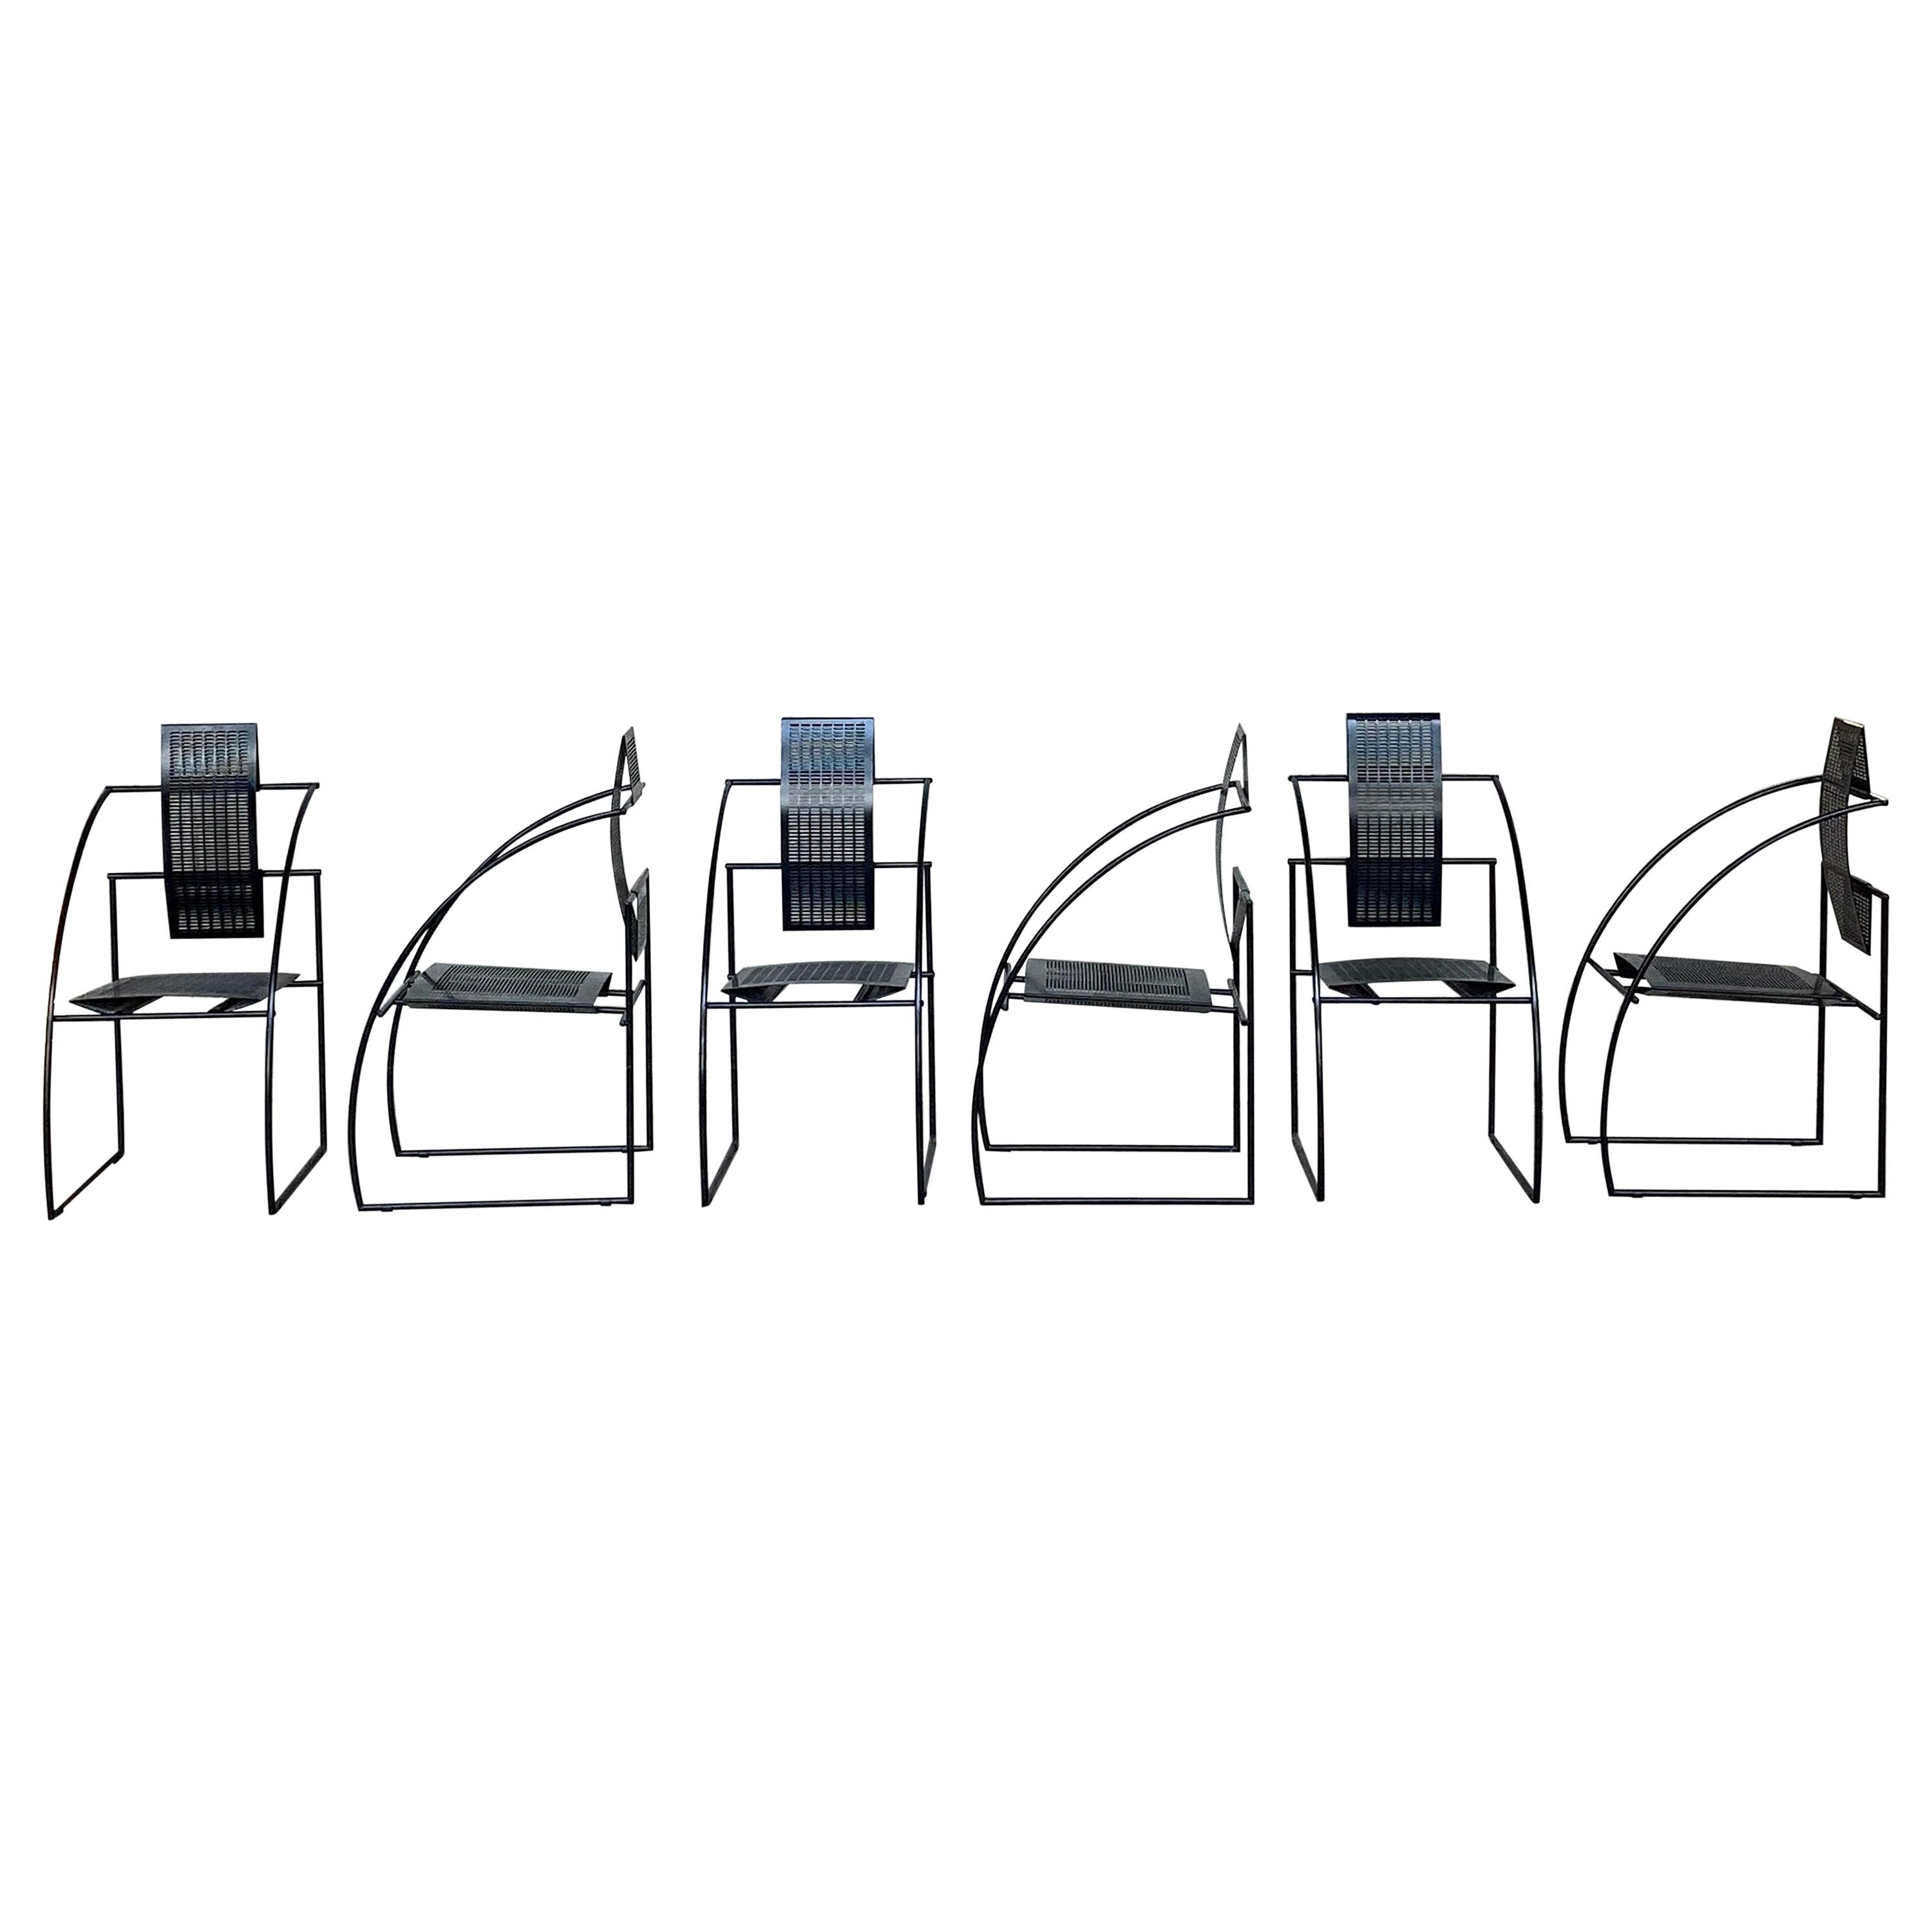 Mario Botta "Quinta" Chairs for Alias, 1985, Set of 6